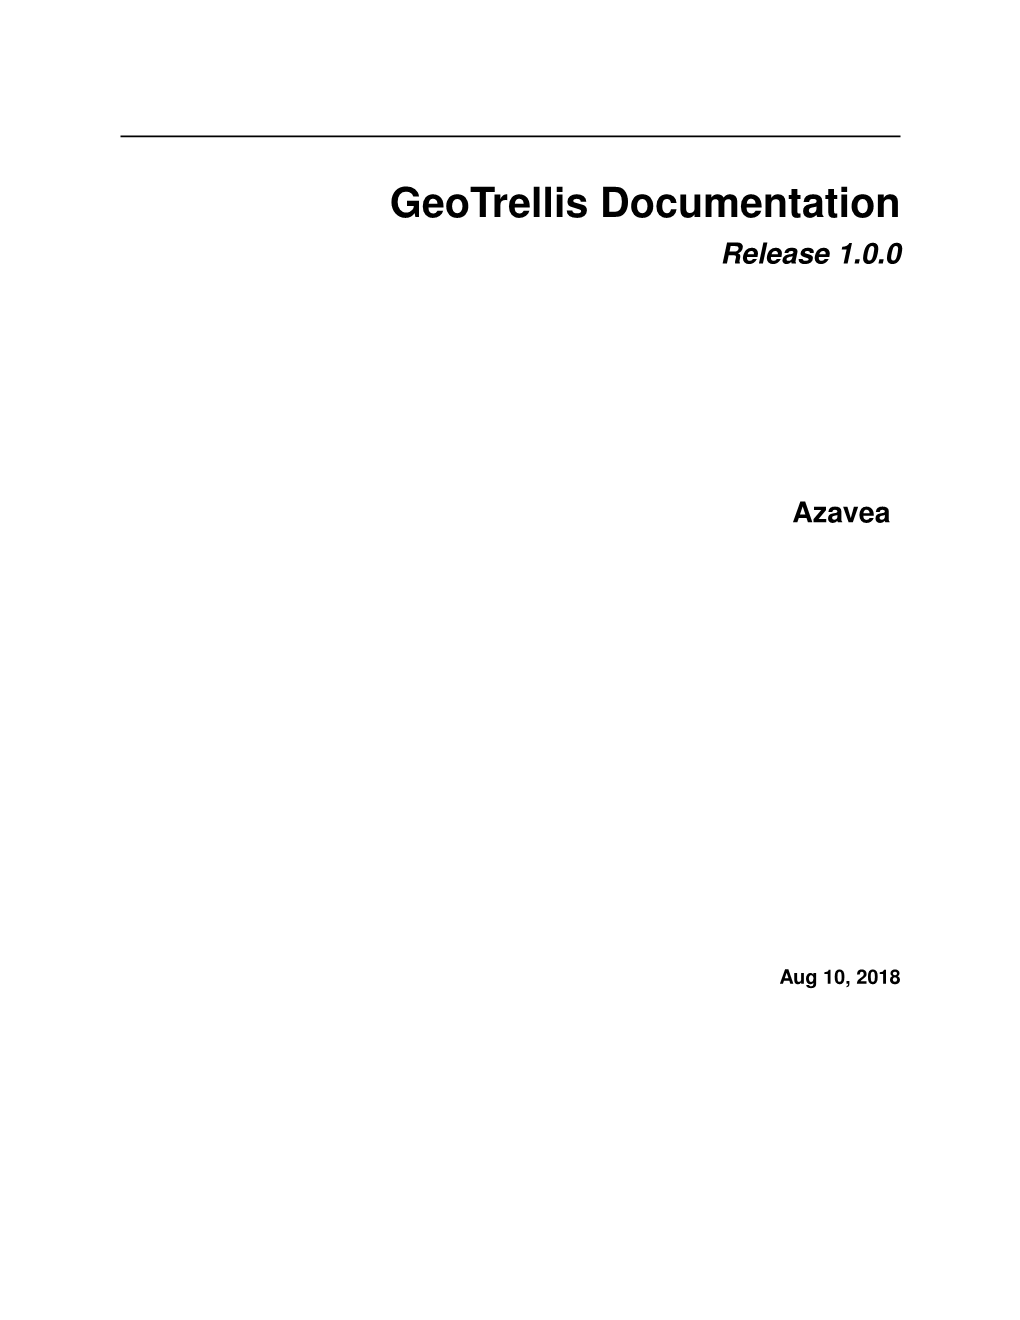 Geotrellis Documentation Release 1.0.0